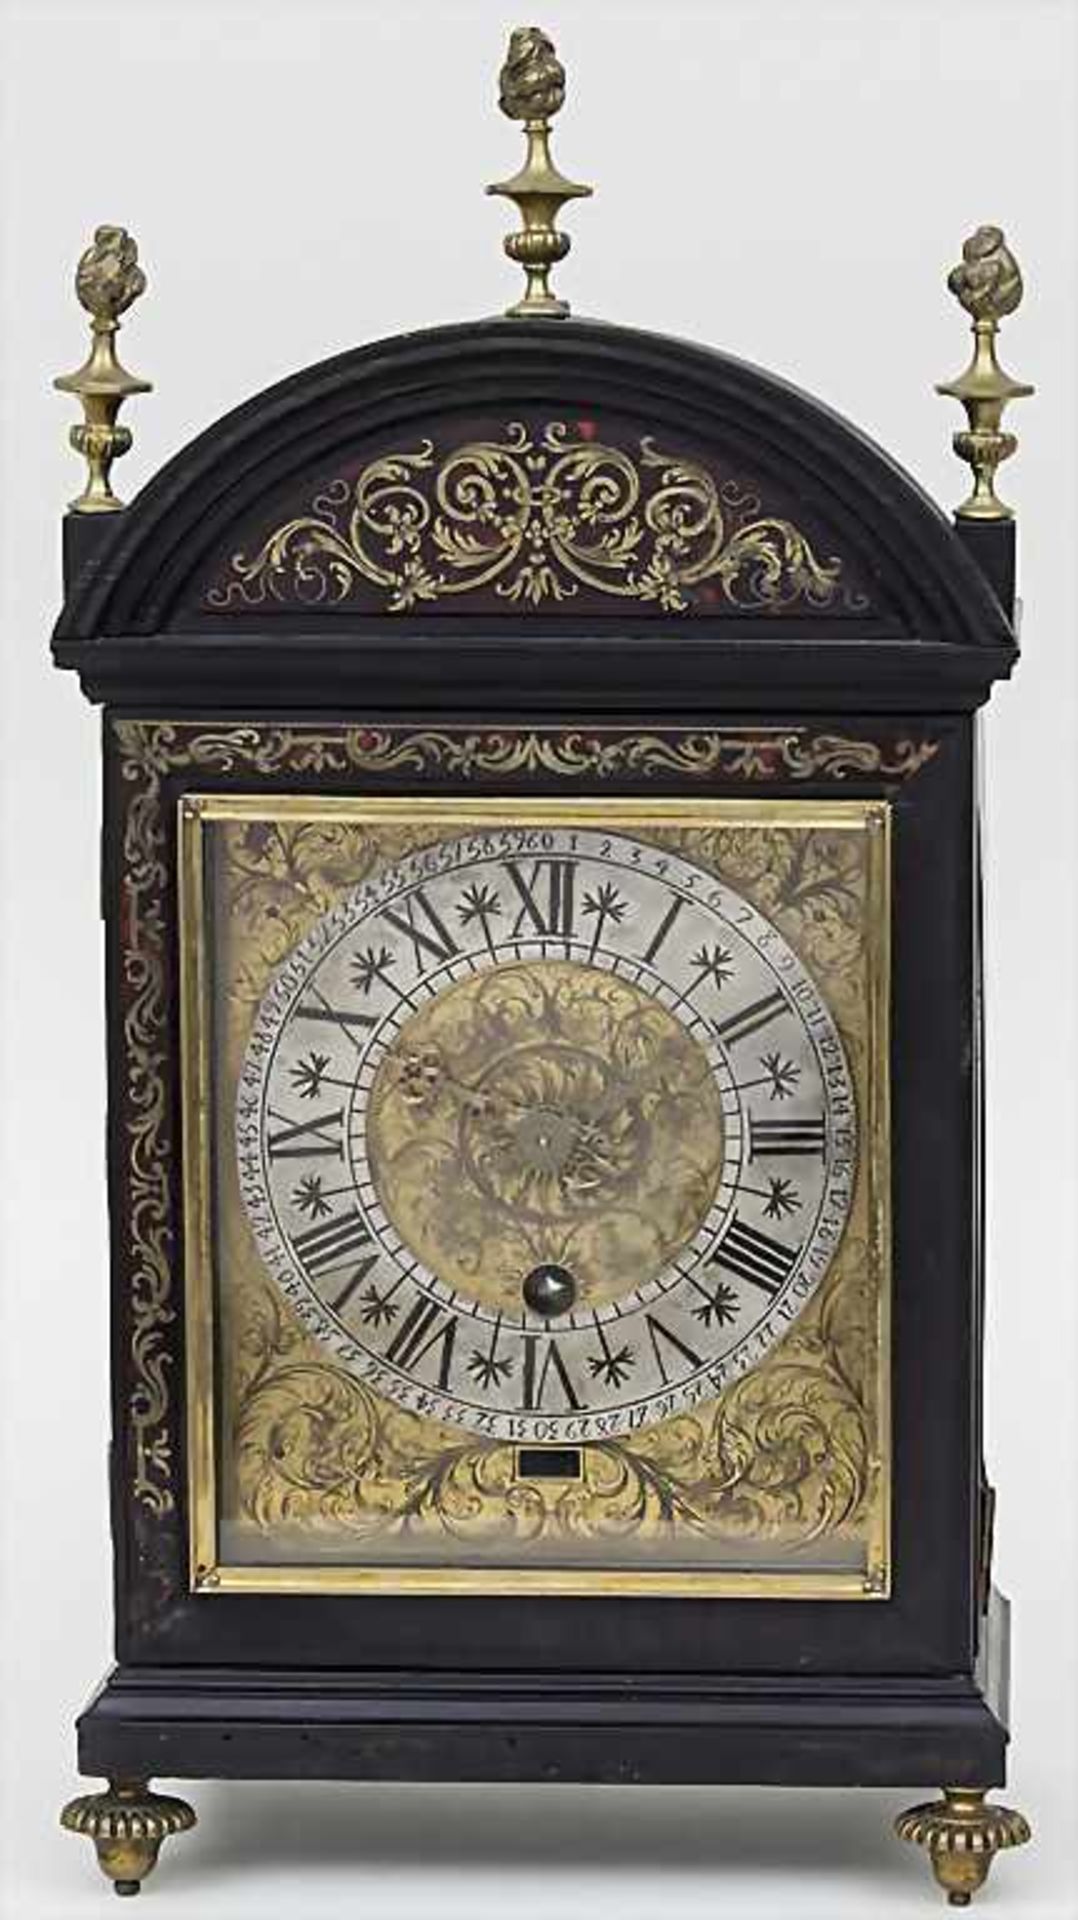 Boulle-Uhr / A clock, Nicolas Gribelin 1637-1719, Paris